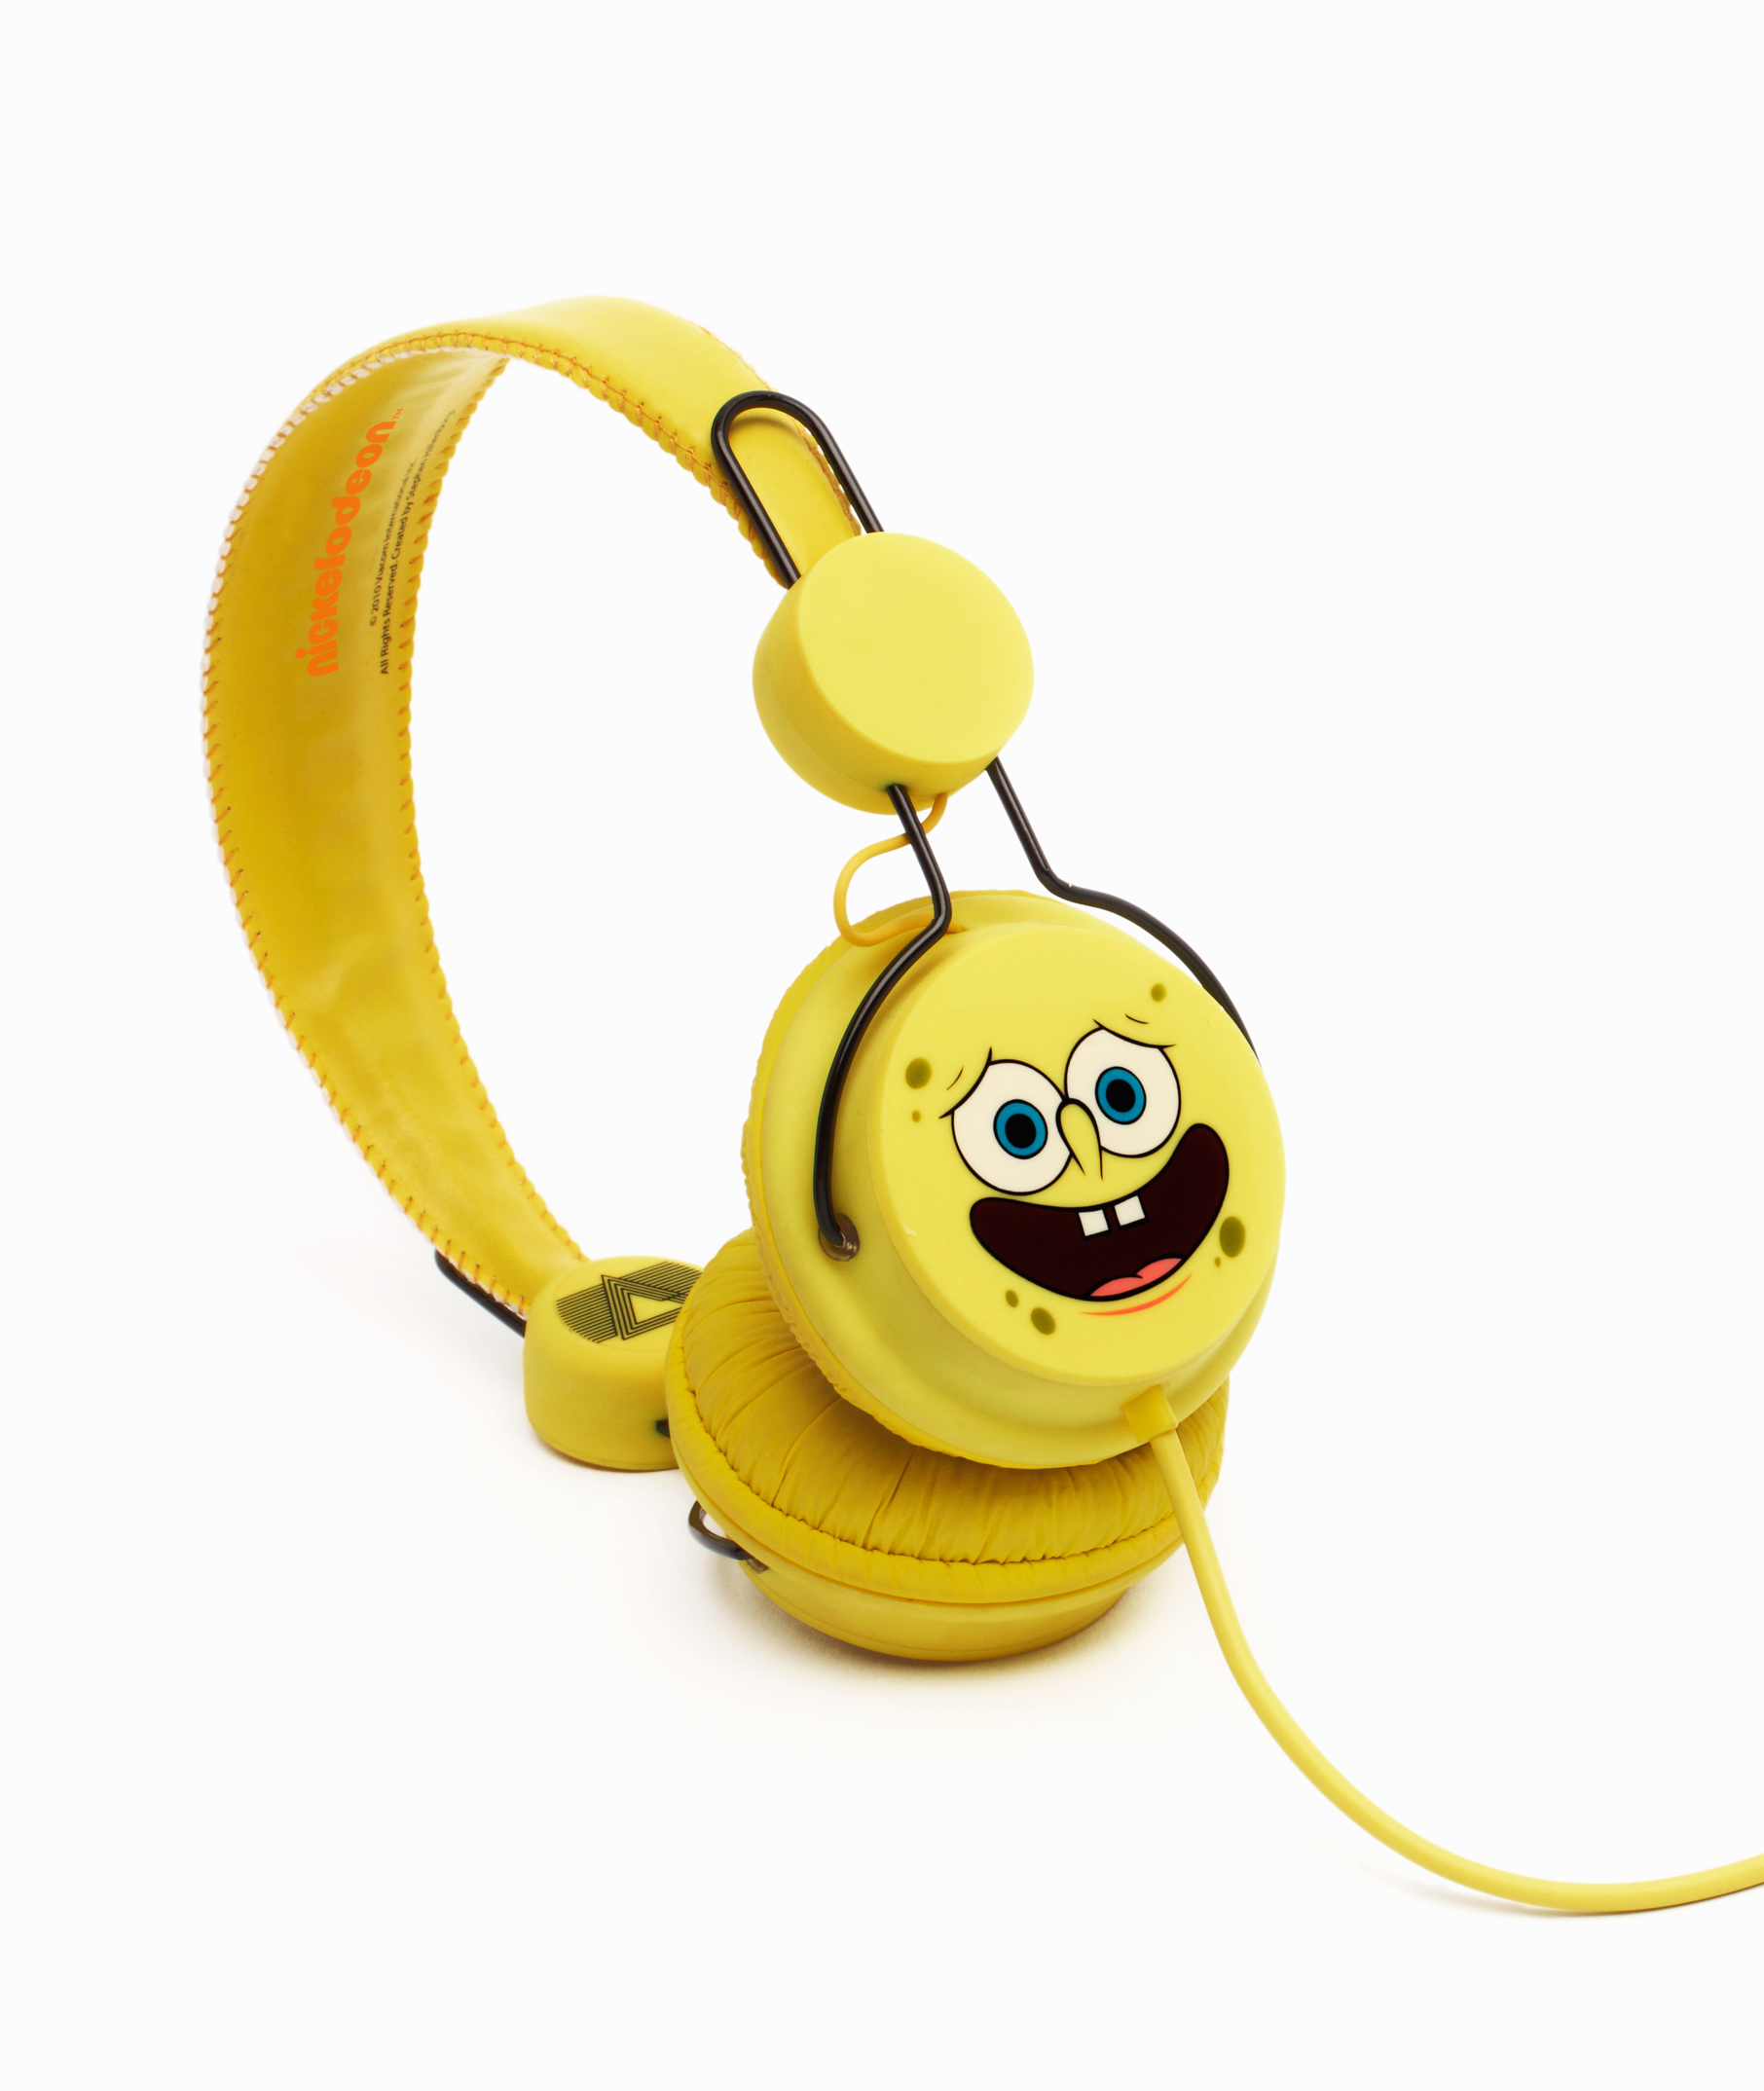 SpongeBob Squarepants Face Headphones from Coloud